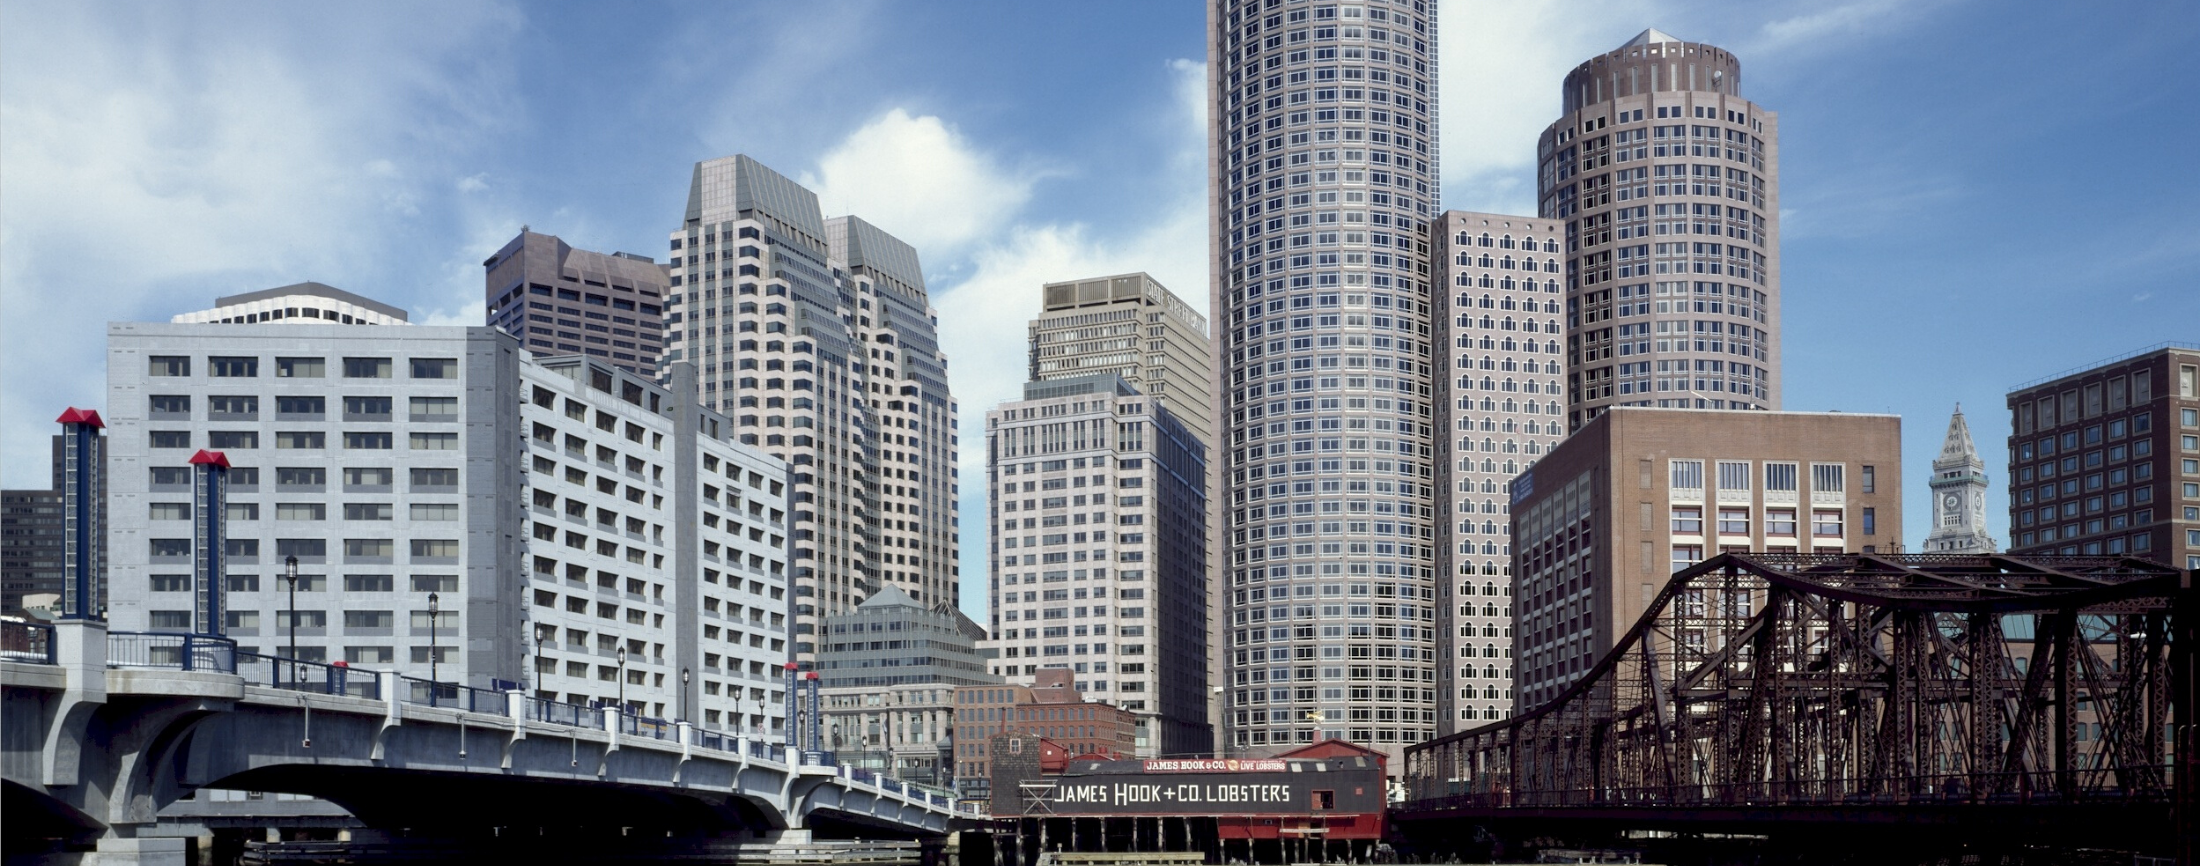 Boston Waterfront skyline